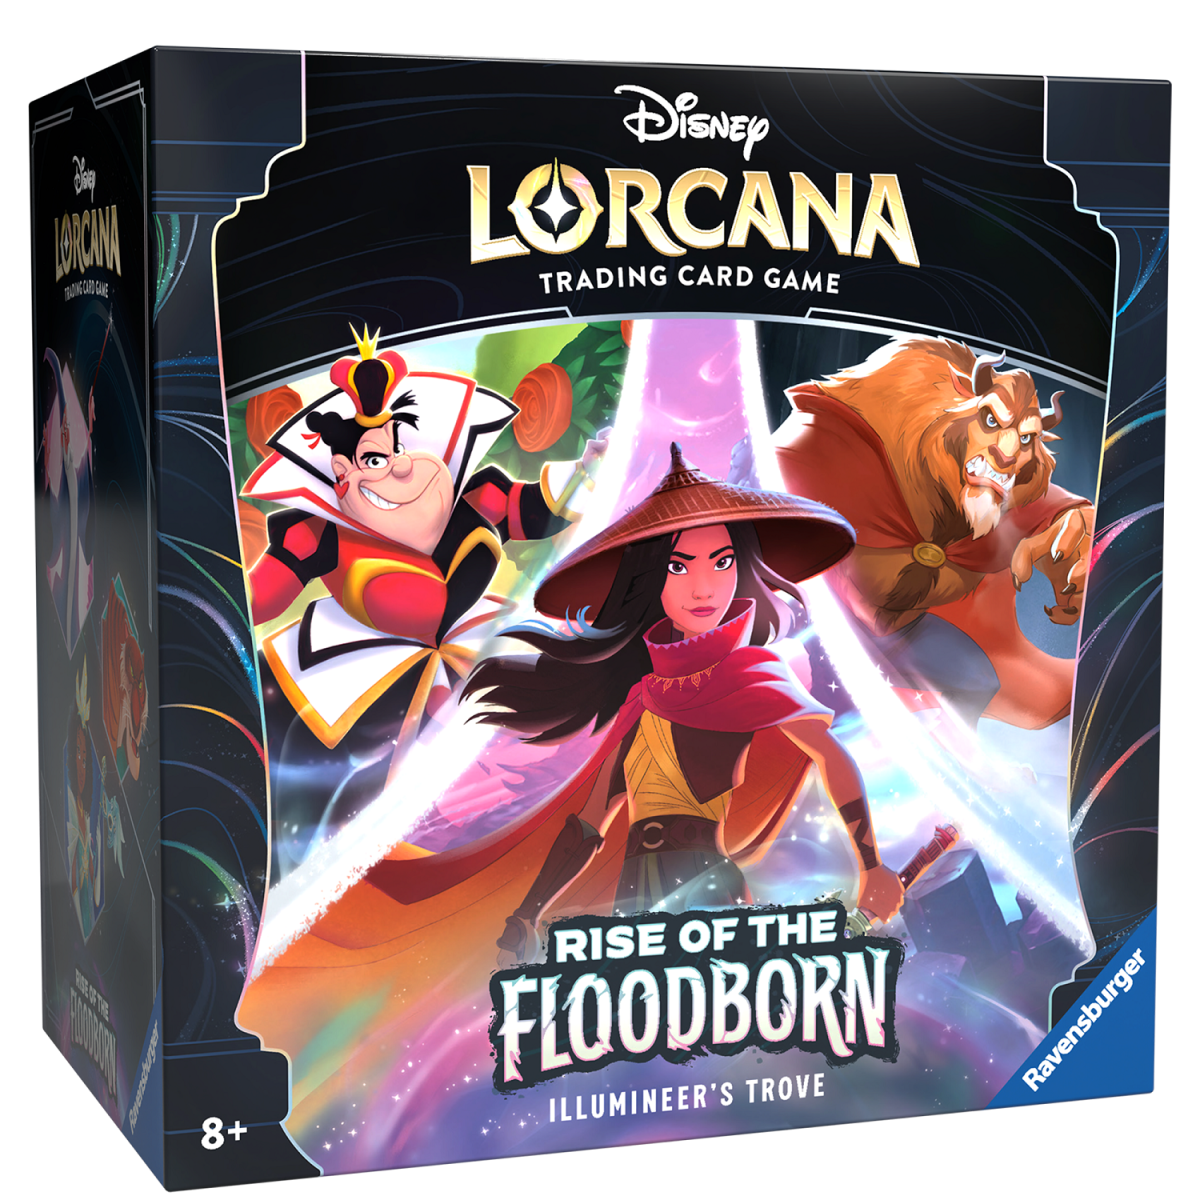 Illumineer's trove for Disney Lorcana Rise of the Floodborn